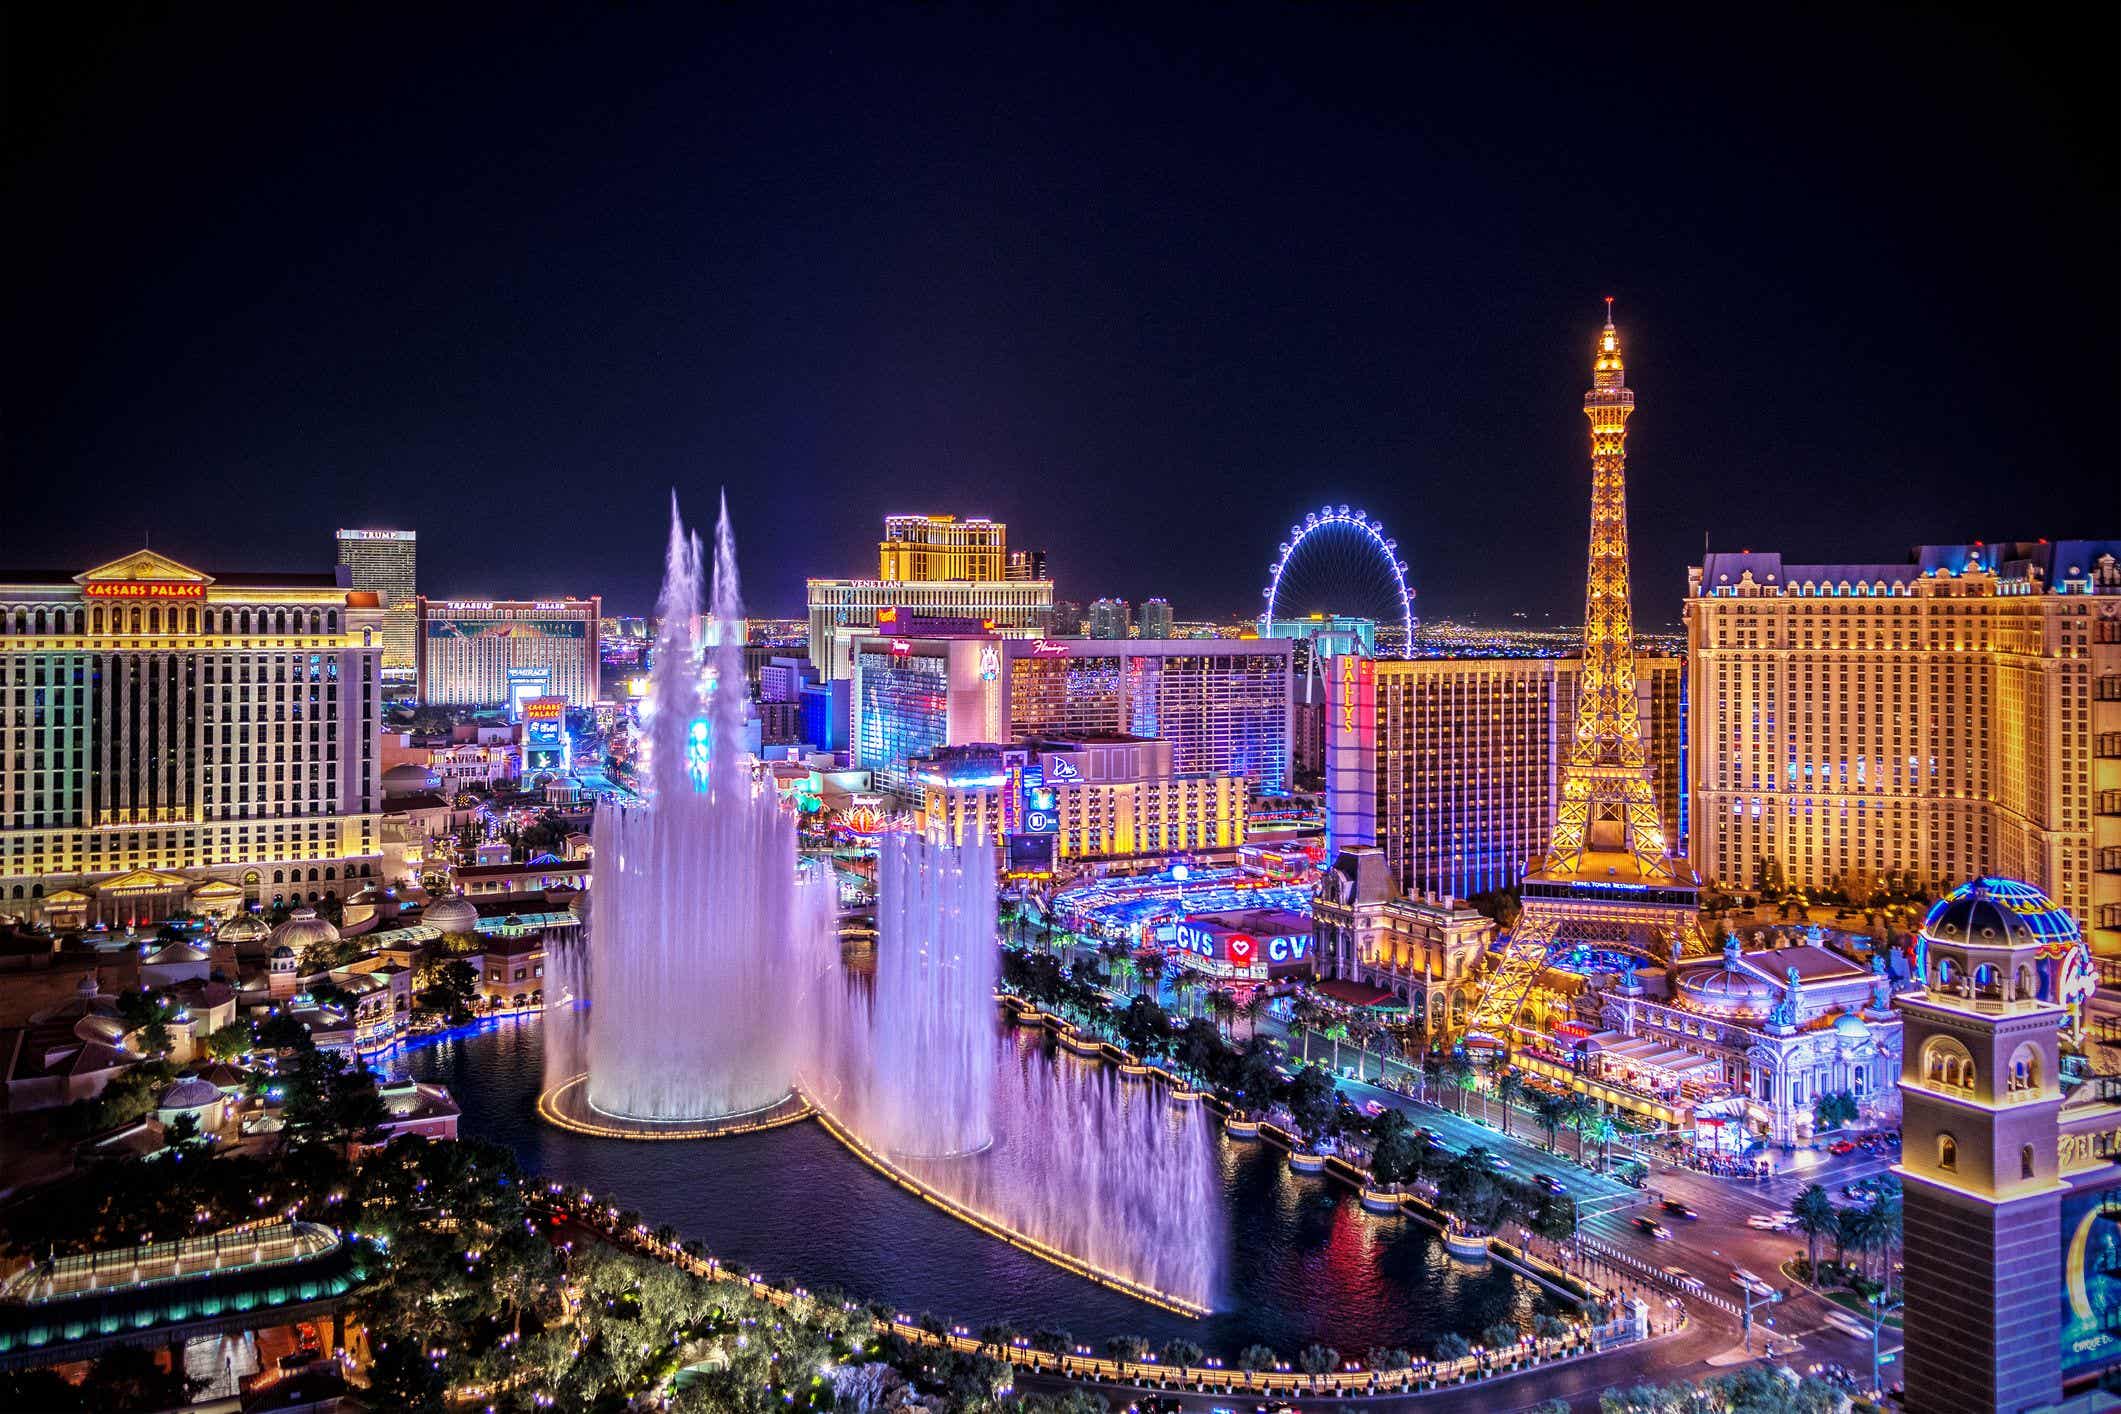 Viva Las Vegas: Caesars Entertainment No Longer Screening for